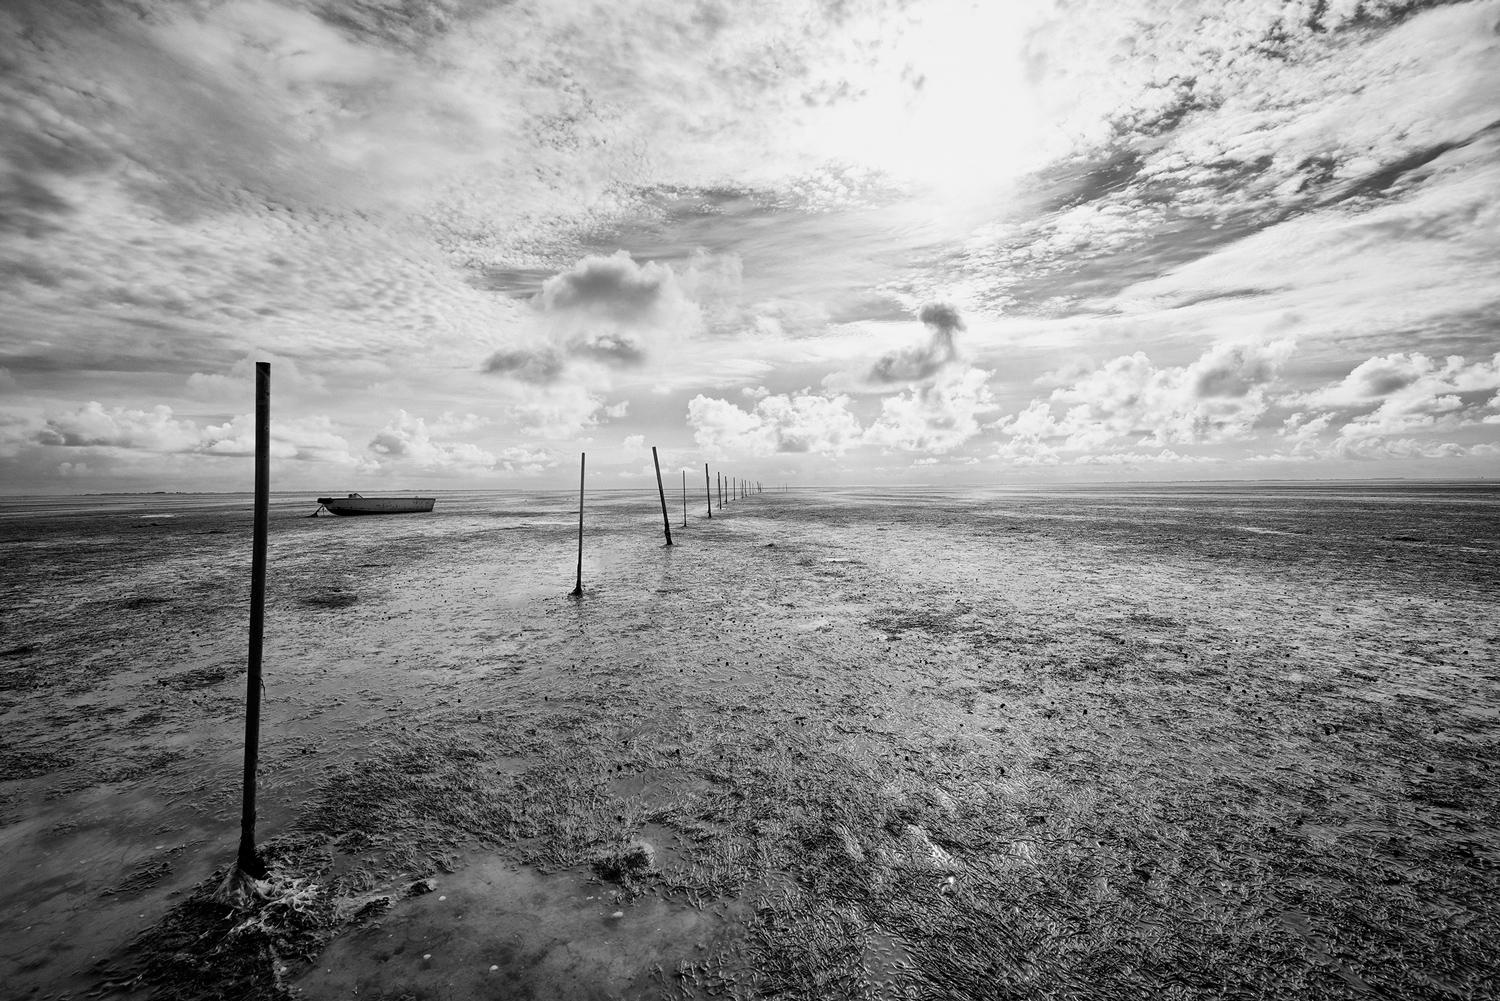 Watty Horizon - contemporary black & white landscape photograph with ocean